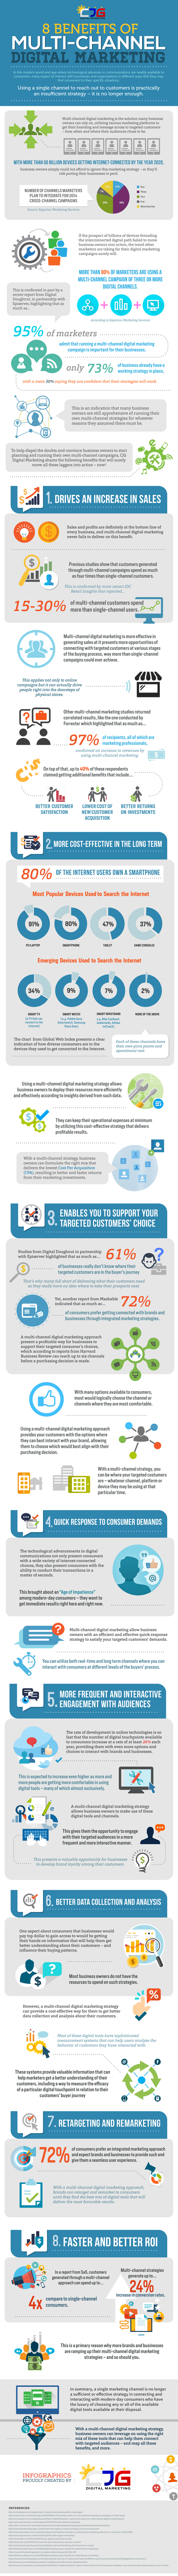 8-Benefits-of-Multi-Channel-Digital-Marketing